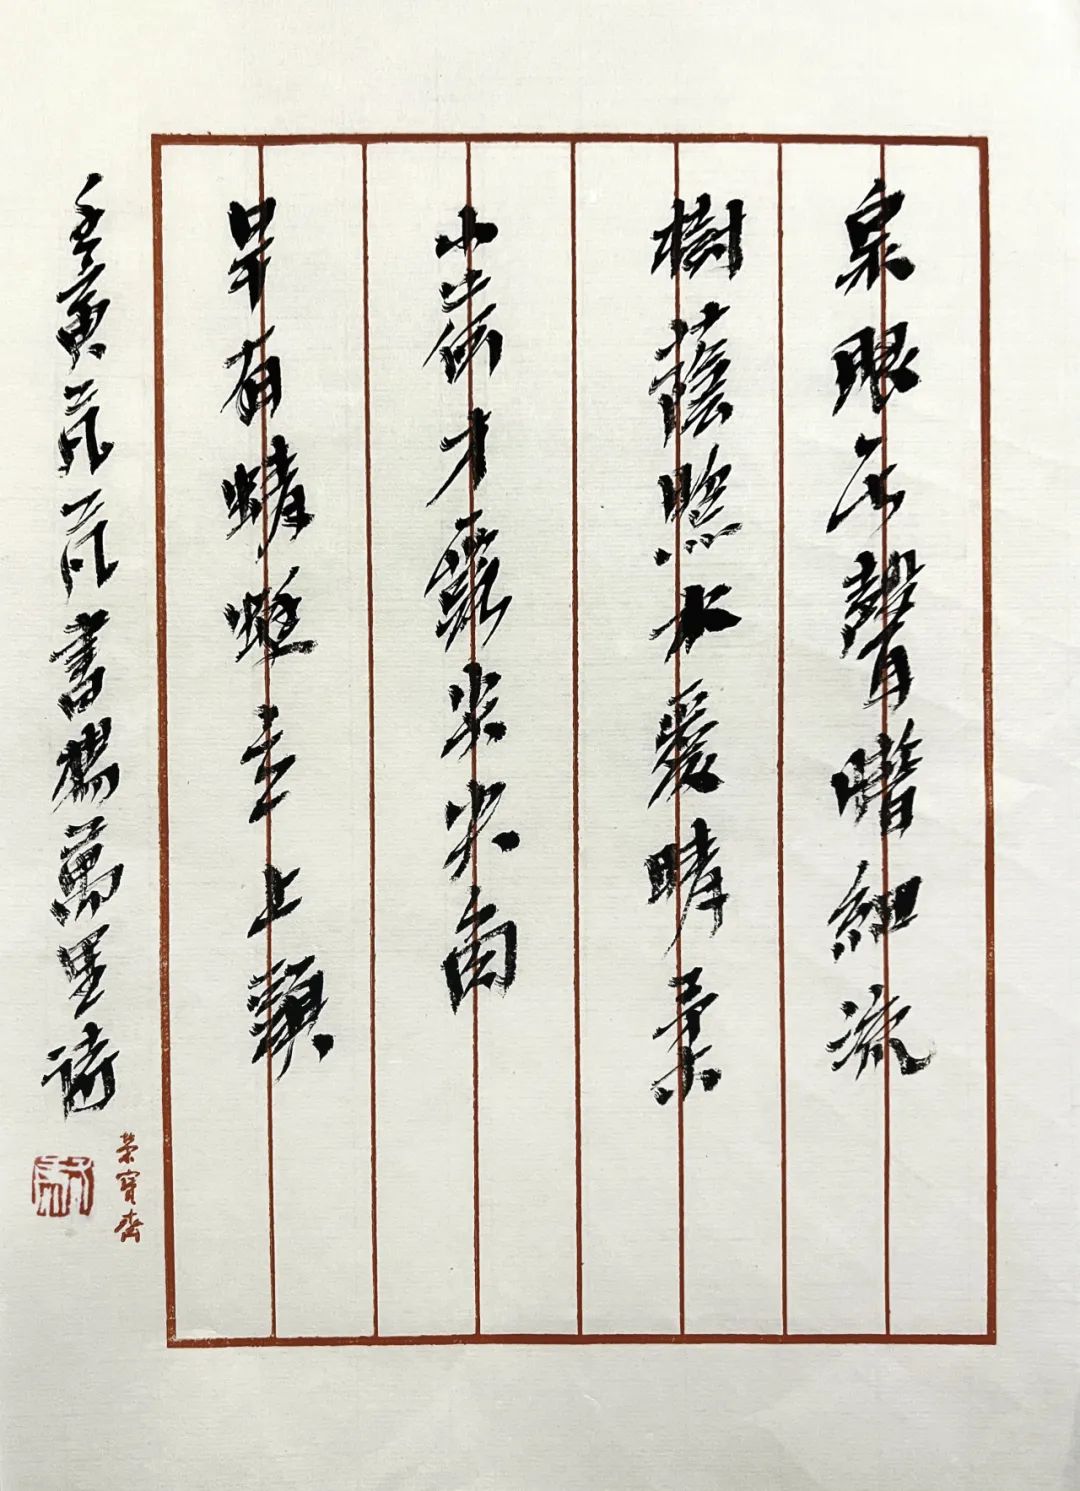  (Song Dynasty) Yang Wanli's "Little Lotus" Luo Pengpeng's calligraphy